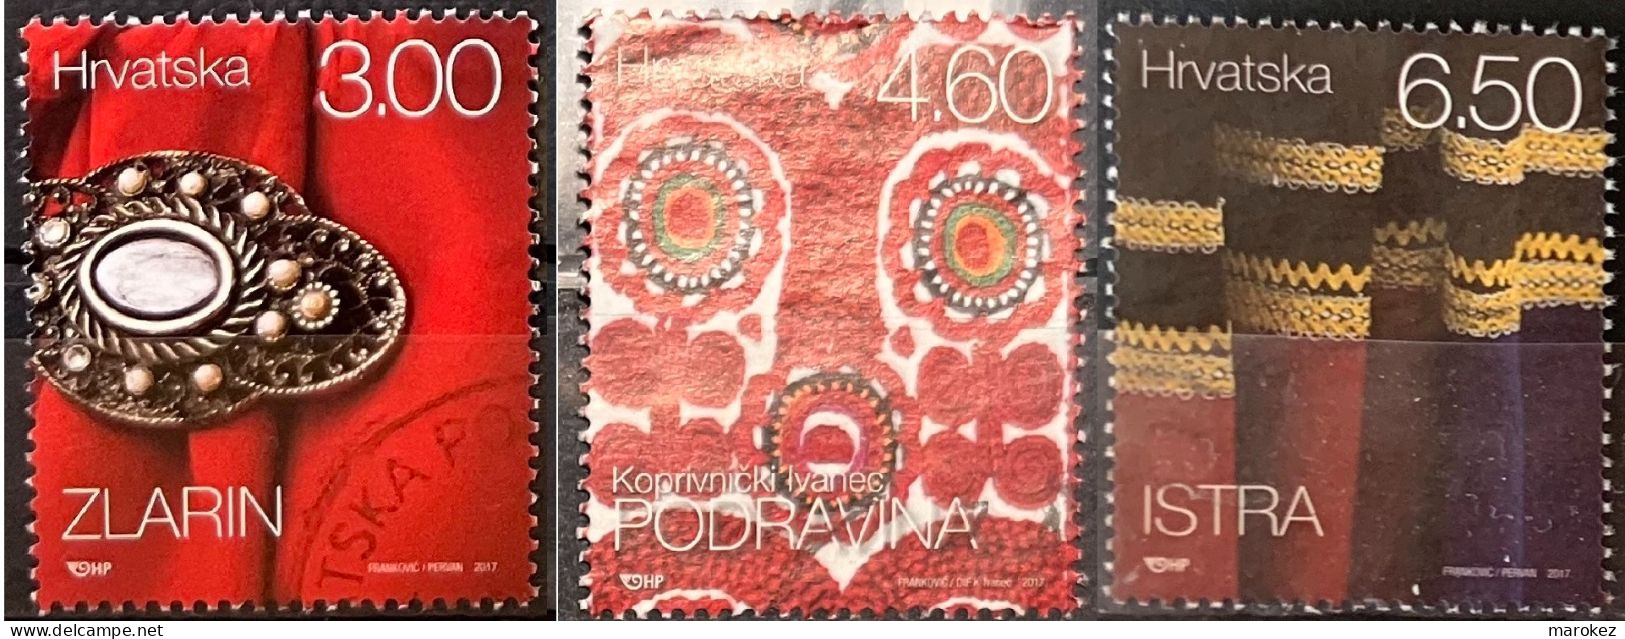 CROATIA 2017 Ethnographical Heritage - Fabric; Zlarin, Istra & Podravina Postally Used Stamps MICHEL # 1268,1269,1271 - Croatie